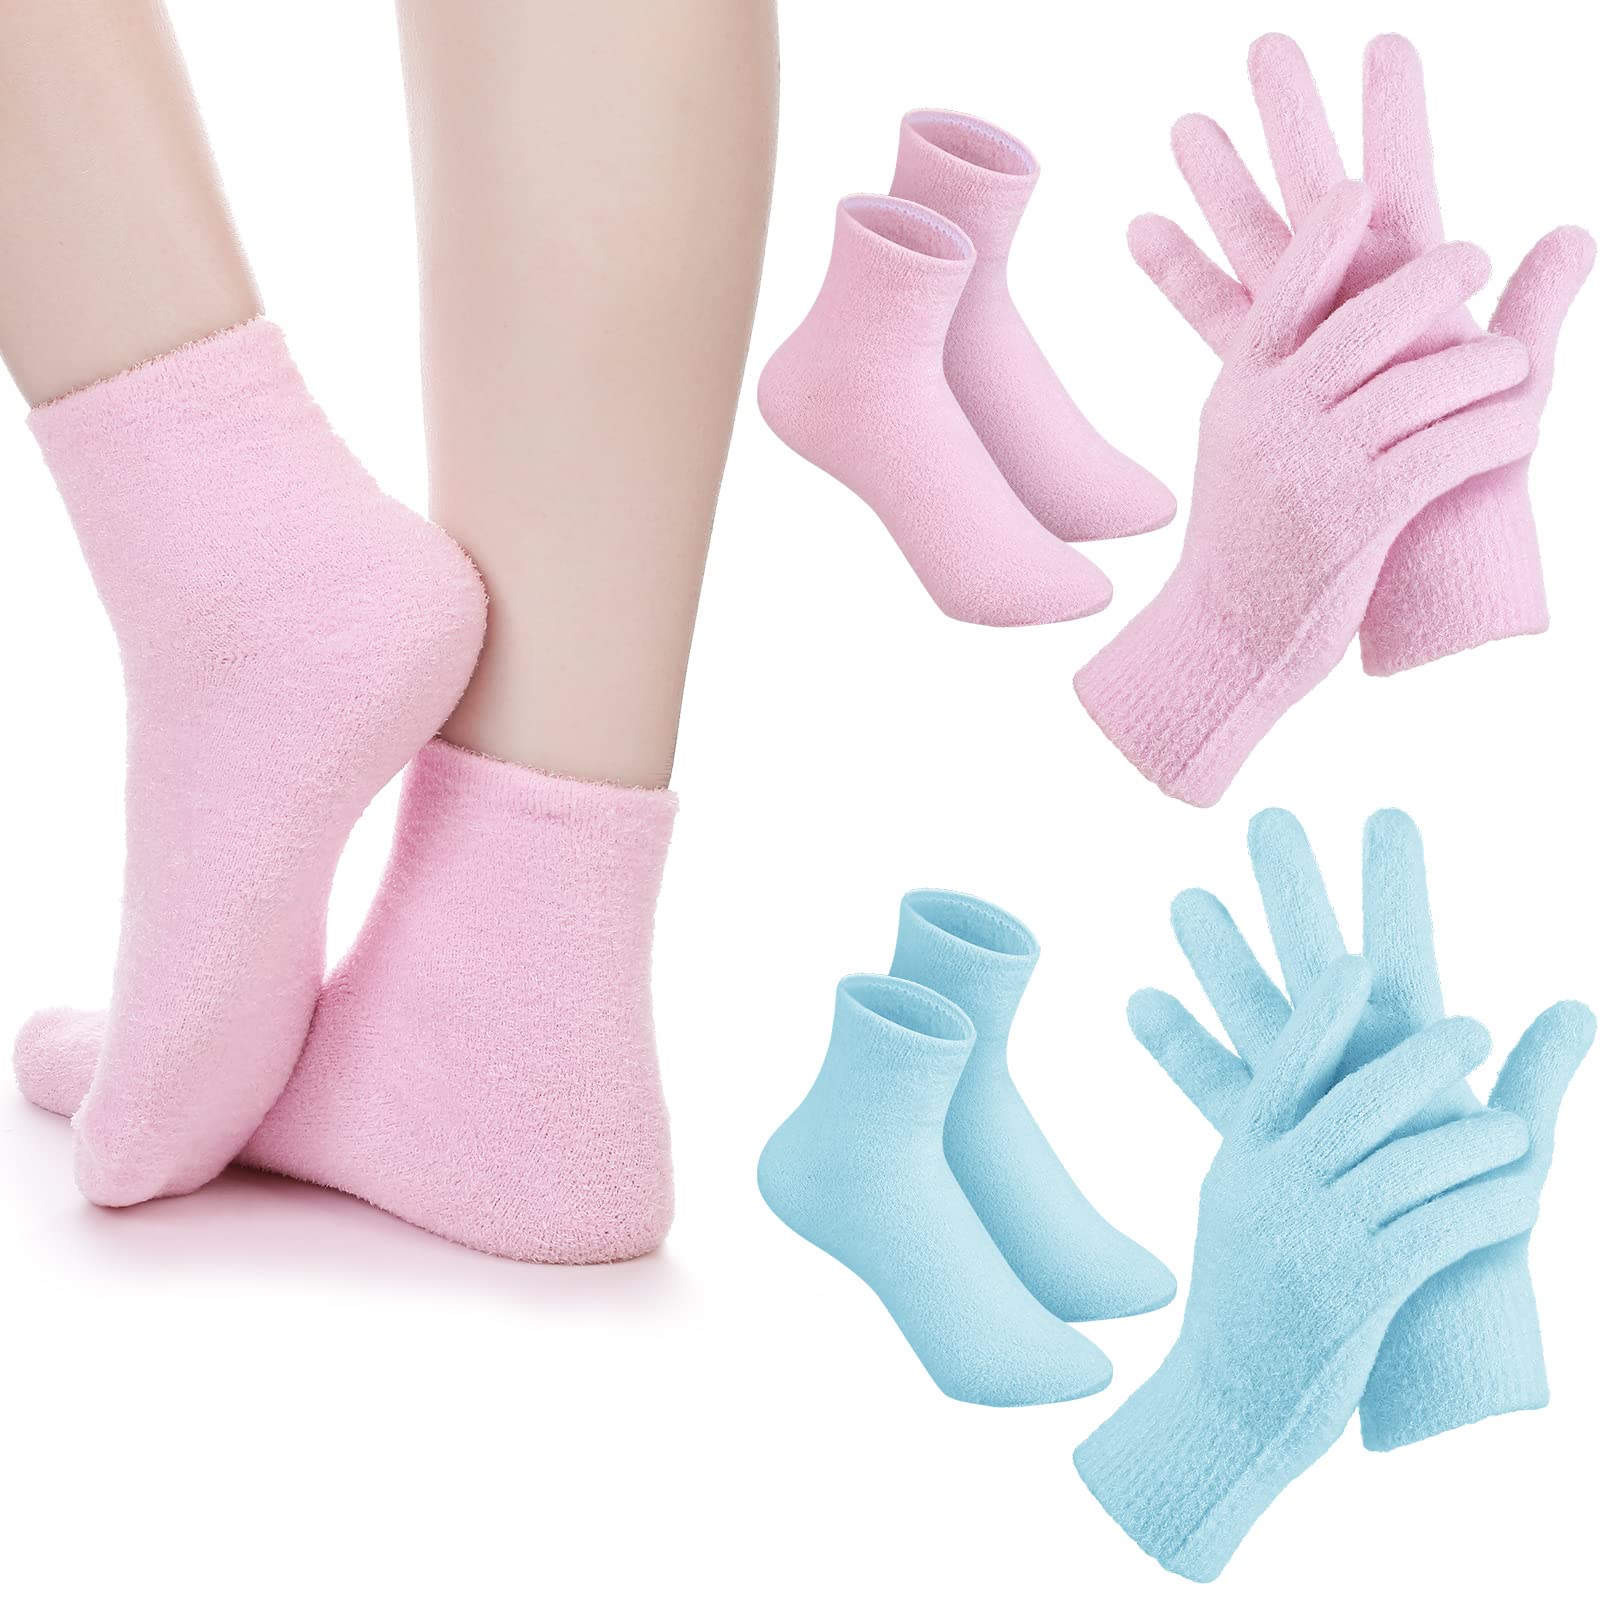 4 Pairs Aloe Socks Moisturizing Foot Socks Soft Gel Sleeping Fuzzy